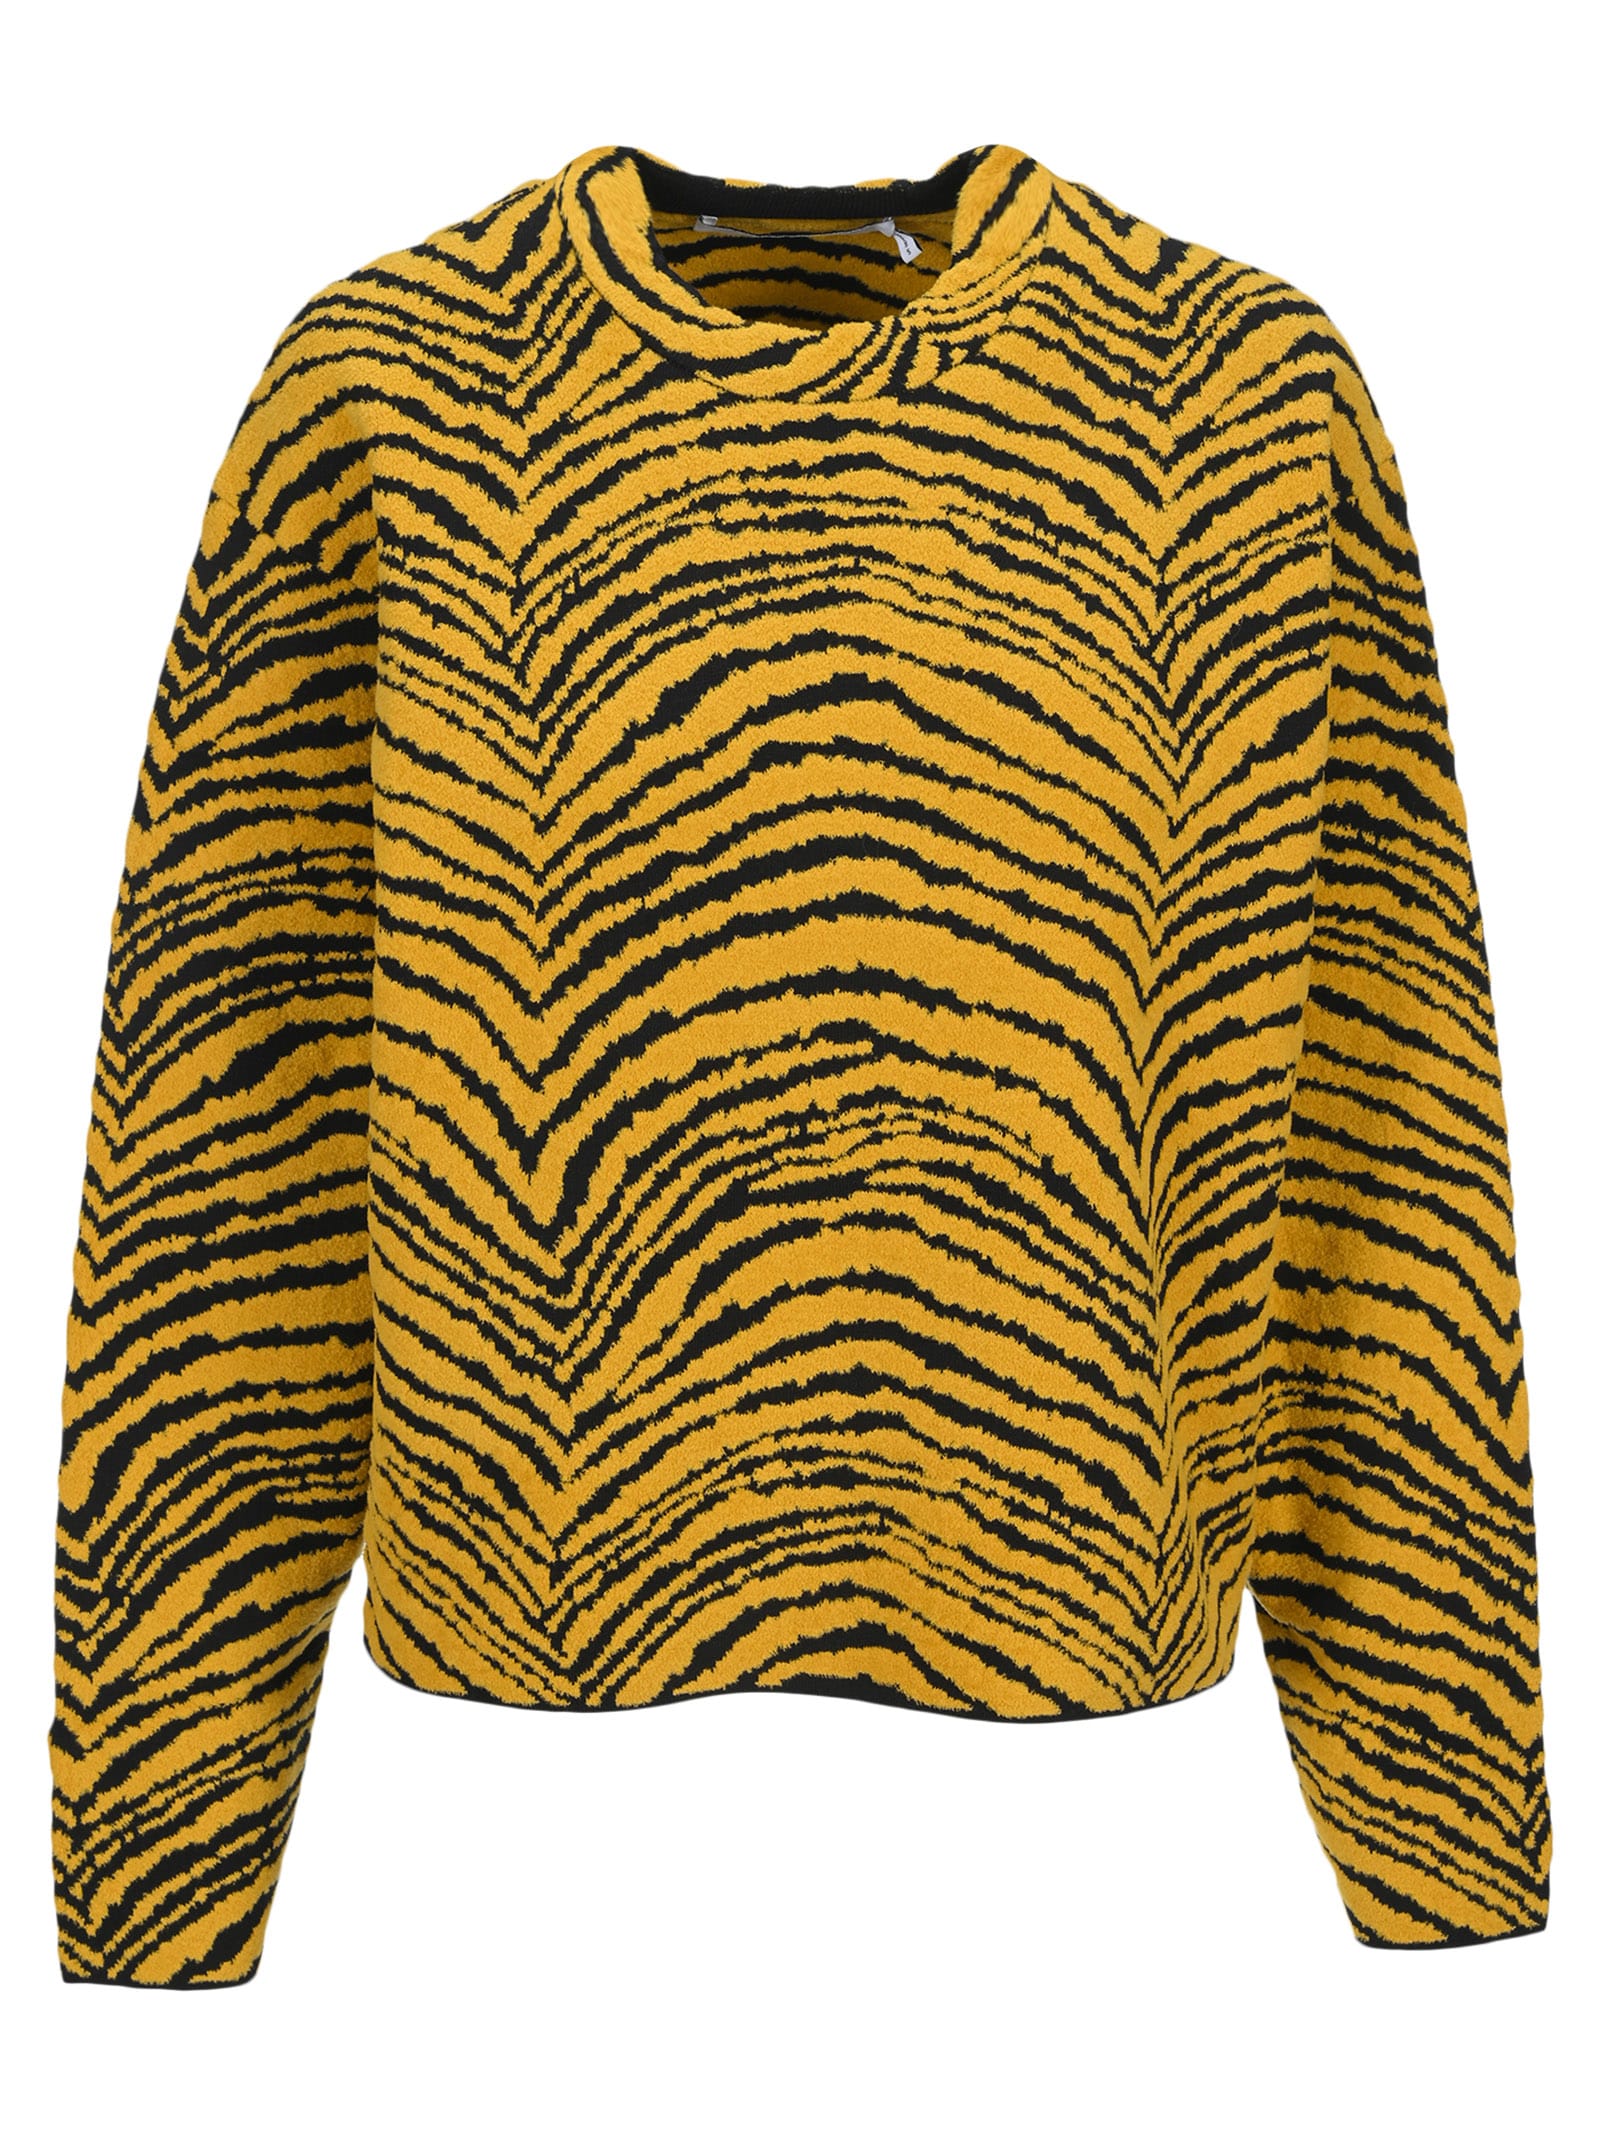 Proenza Schouler Animal Jacquard Sweater